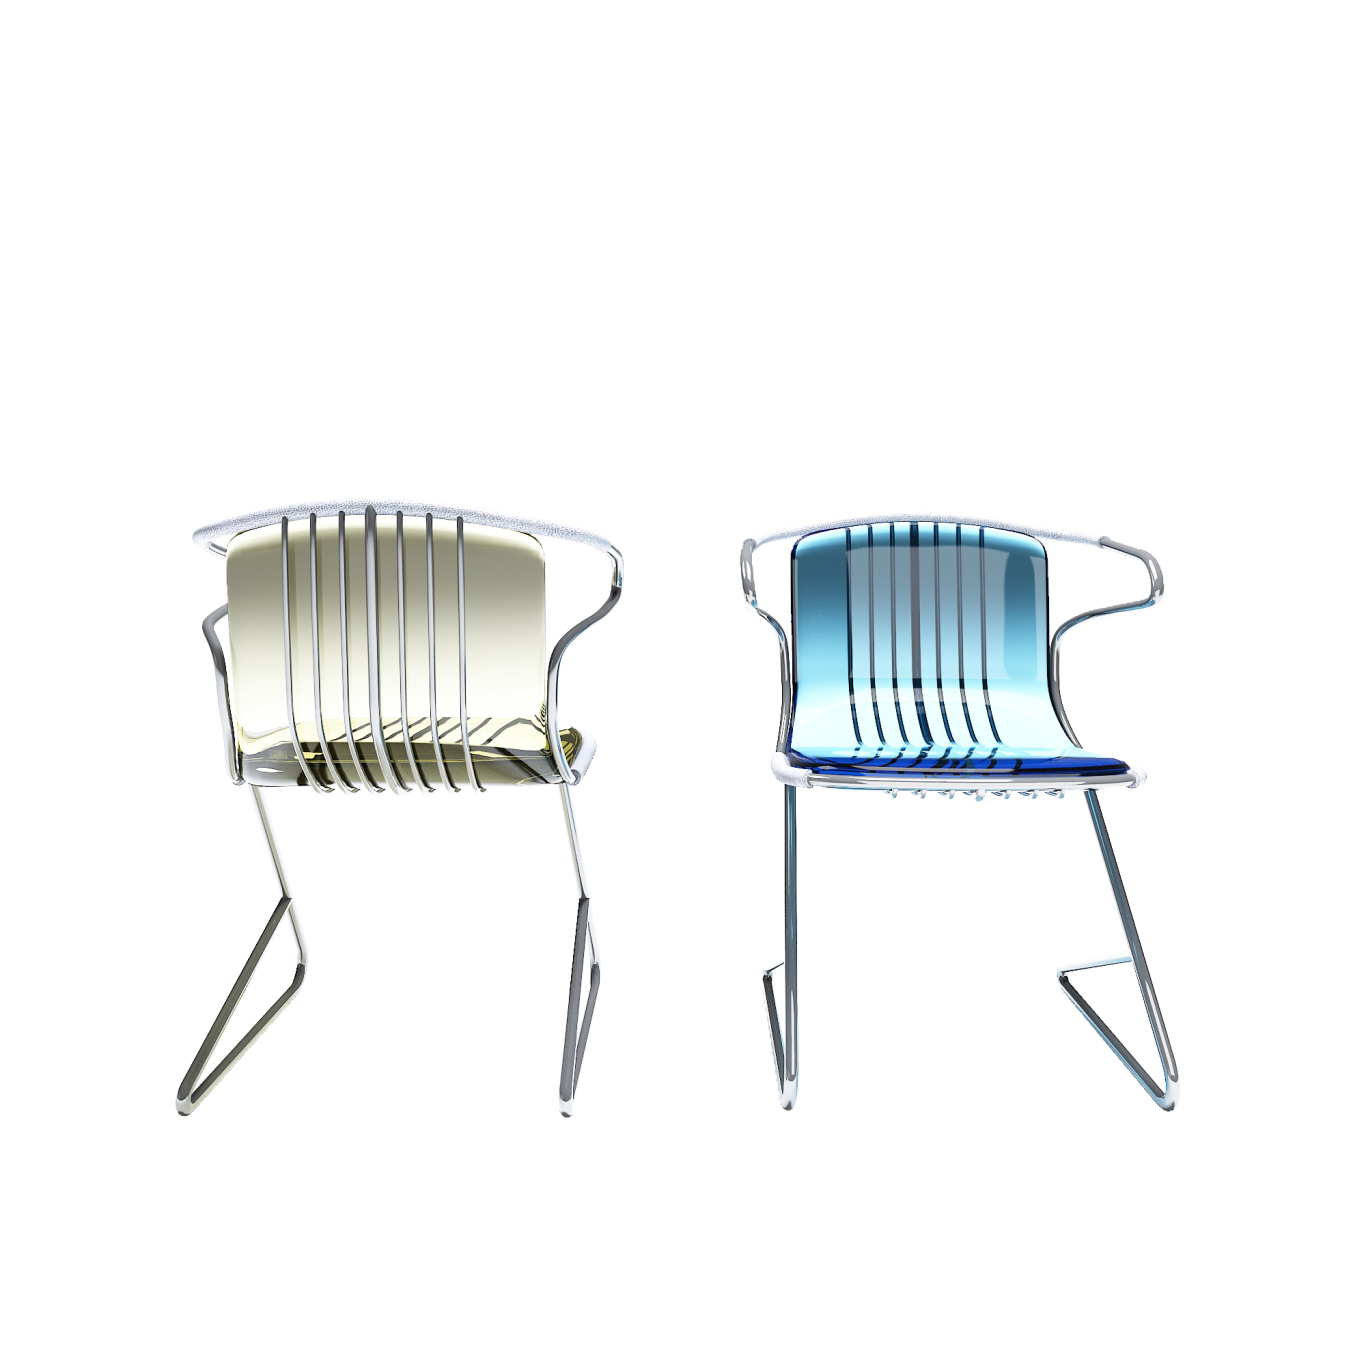 chair-椅子單體設計圖0